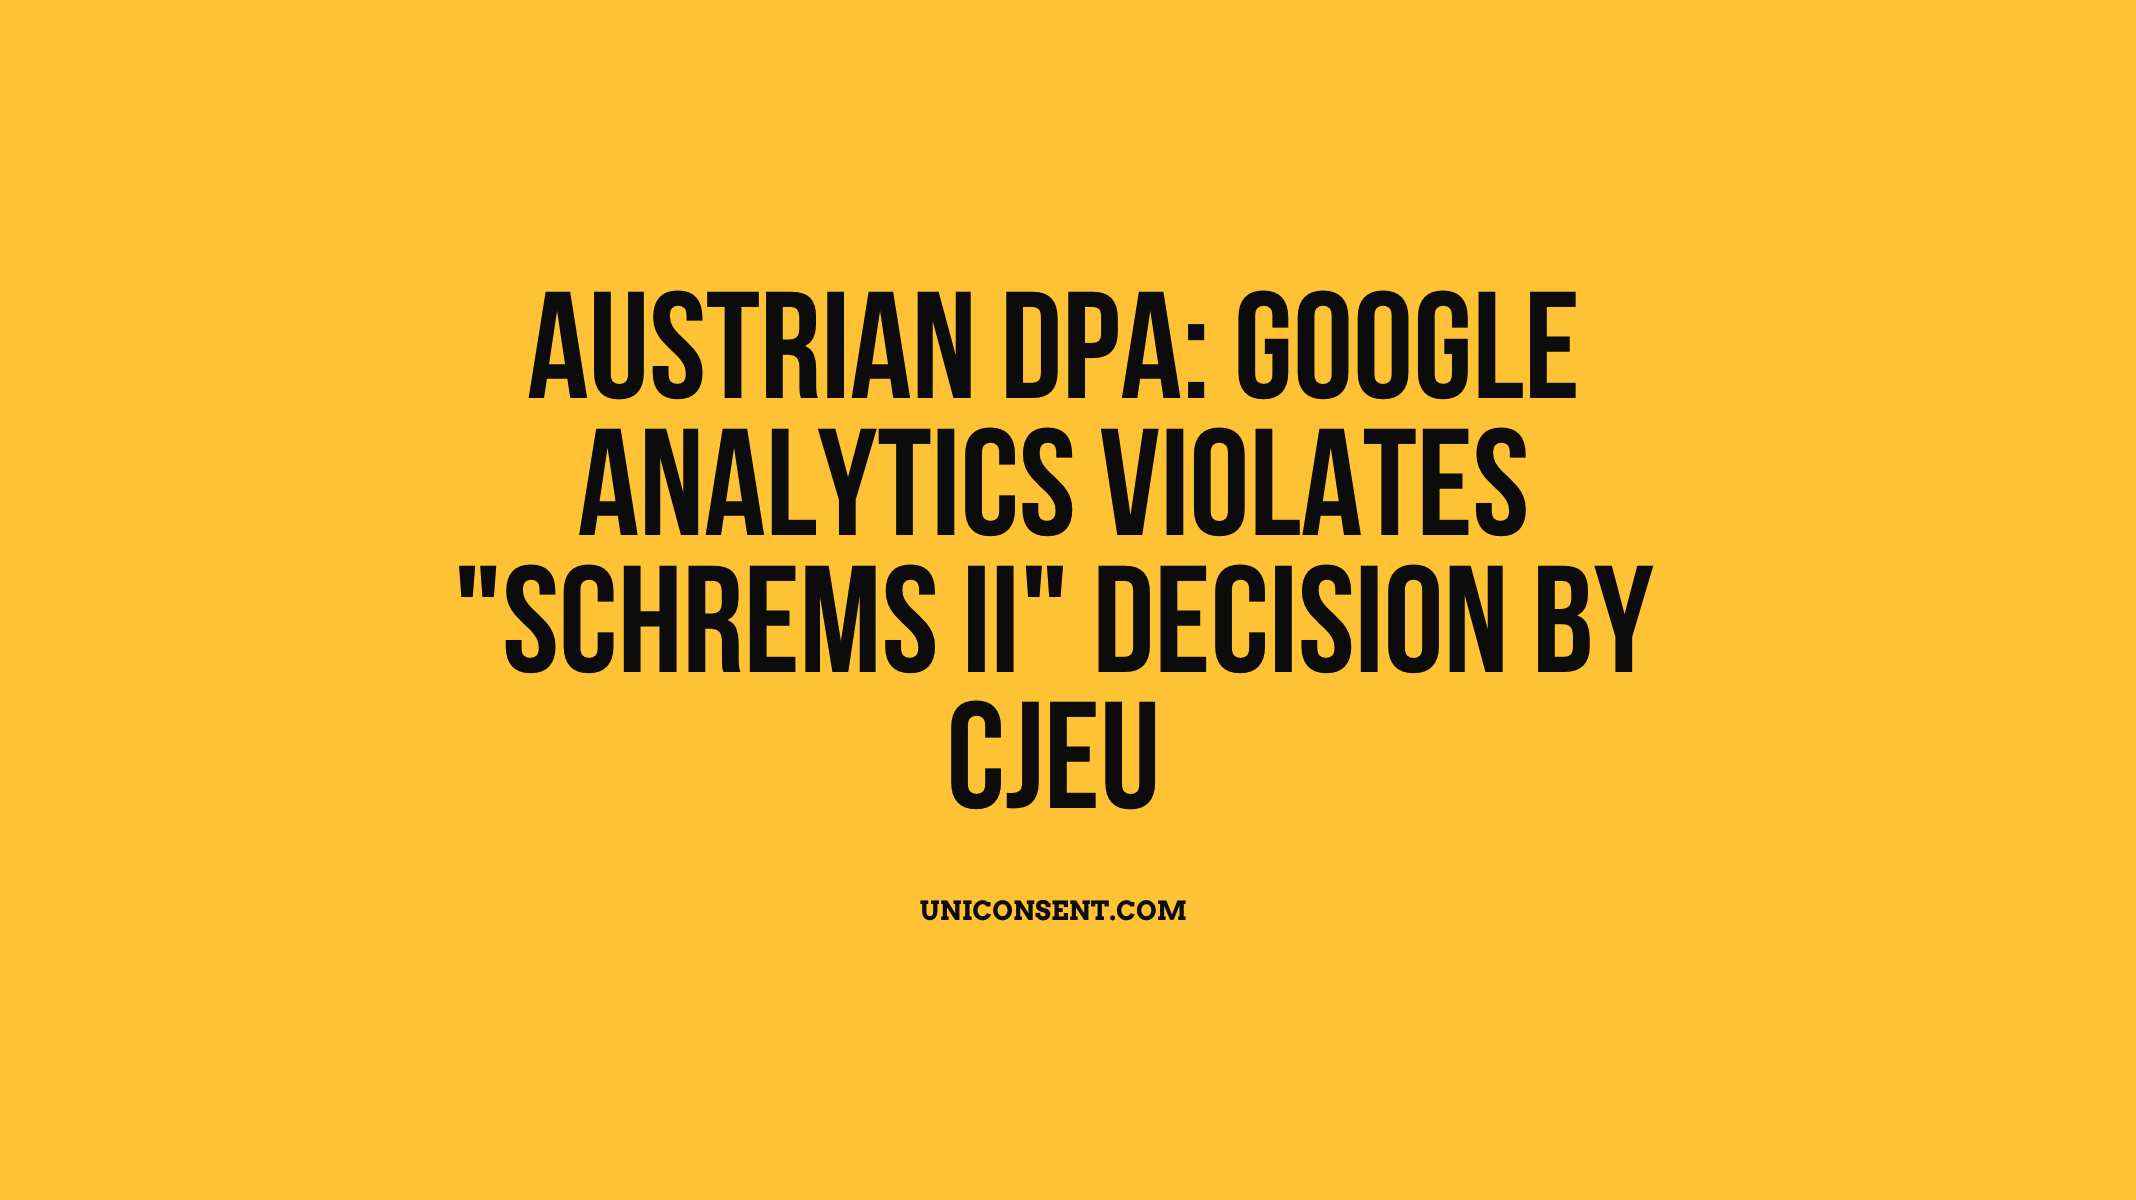 Austrian DPA: Google Analytics without Consent violates Schrems II decision by CJEU